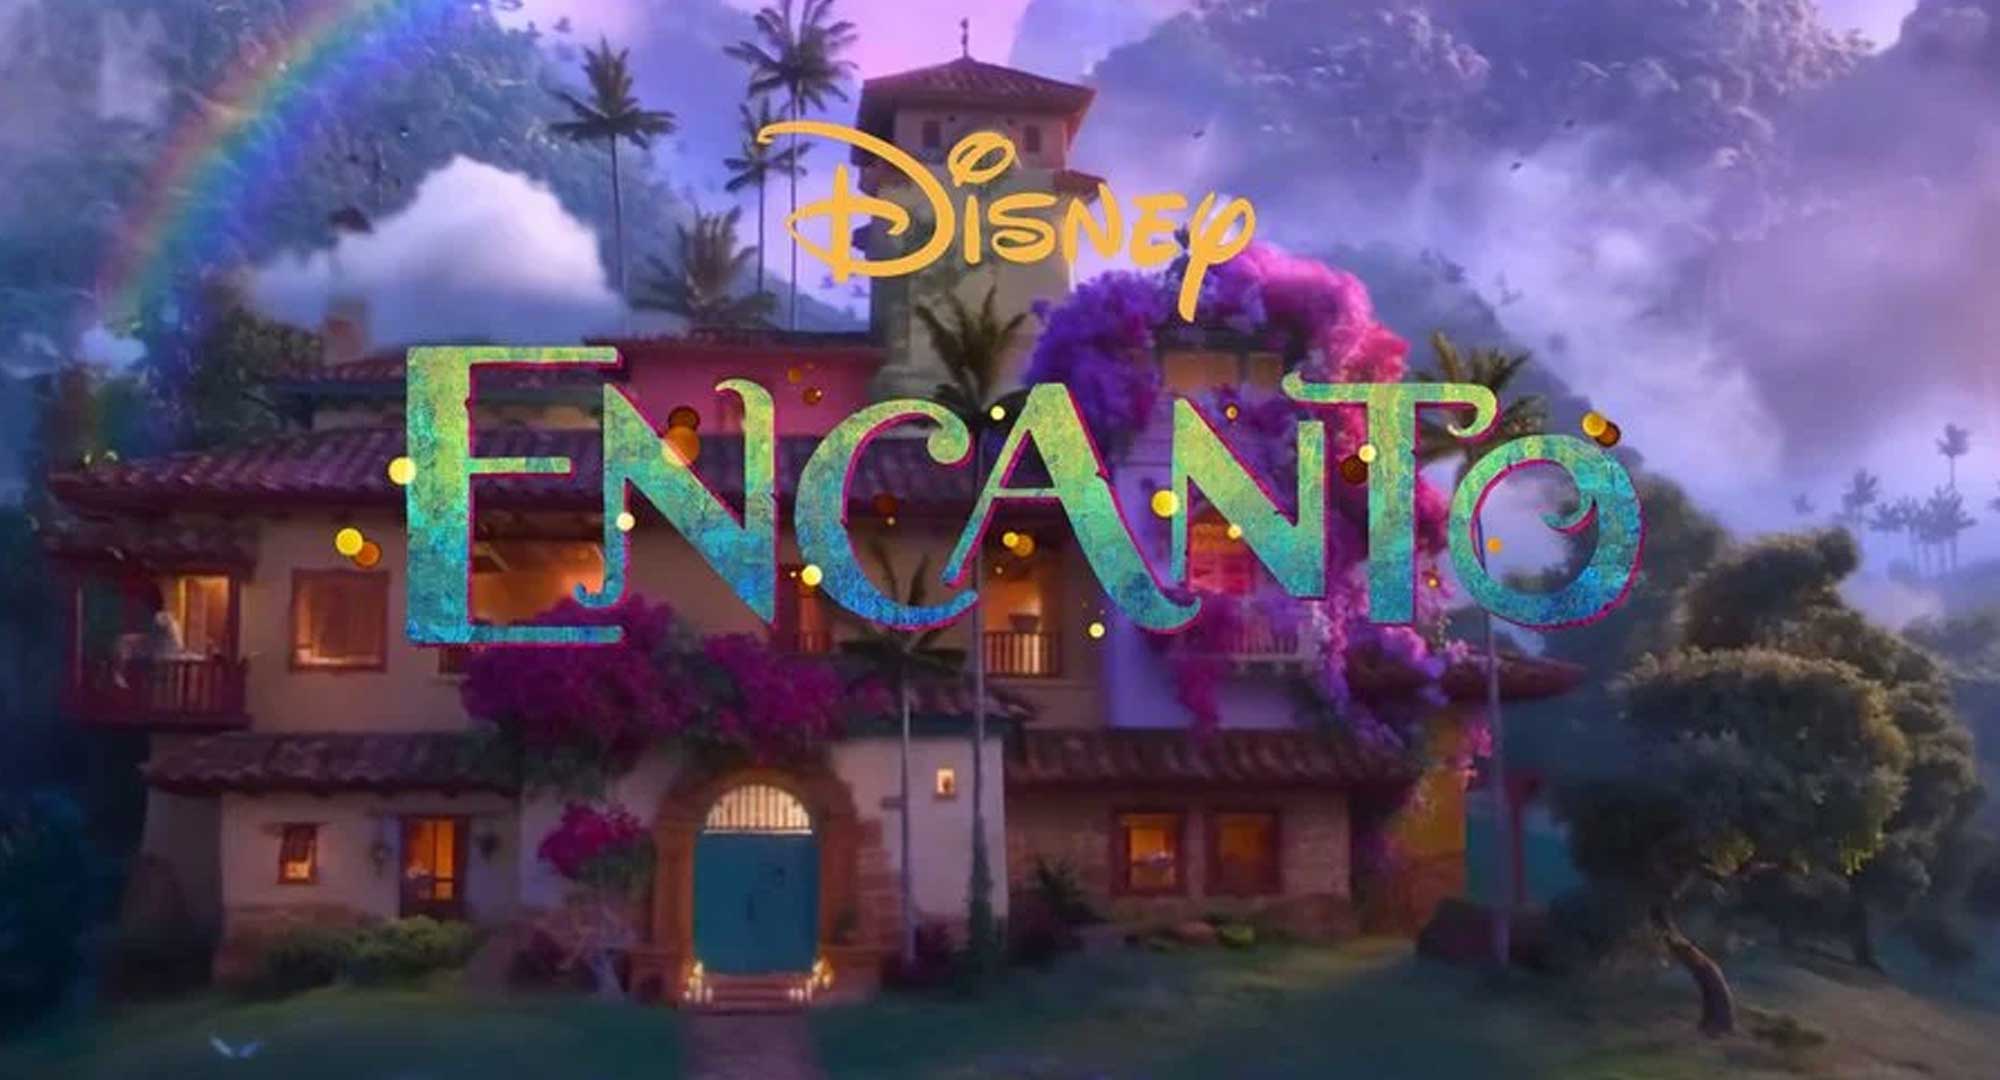 Disney's Encanto